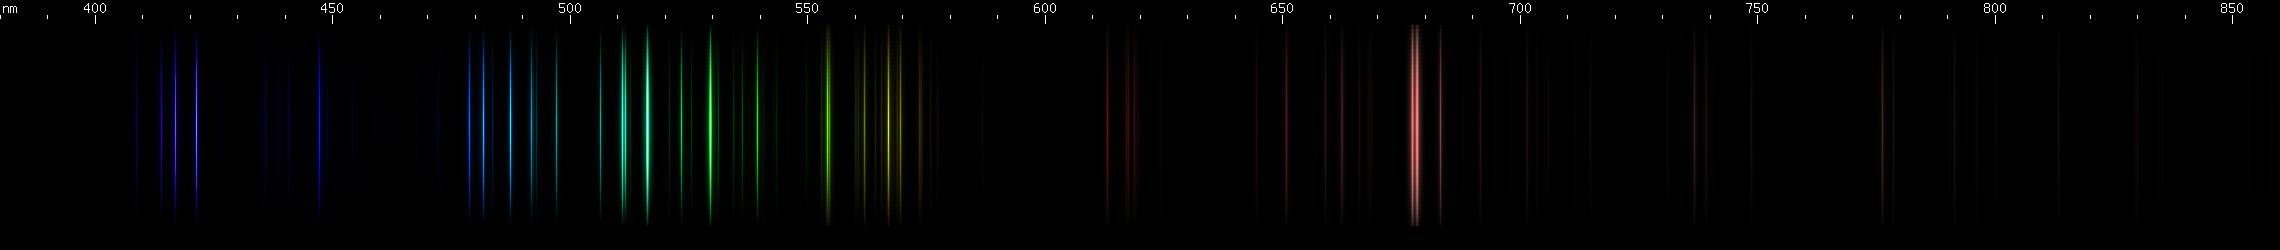 Spectral lines of Palladium.